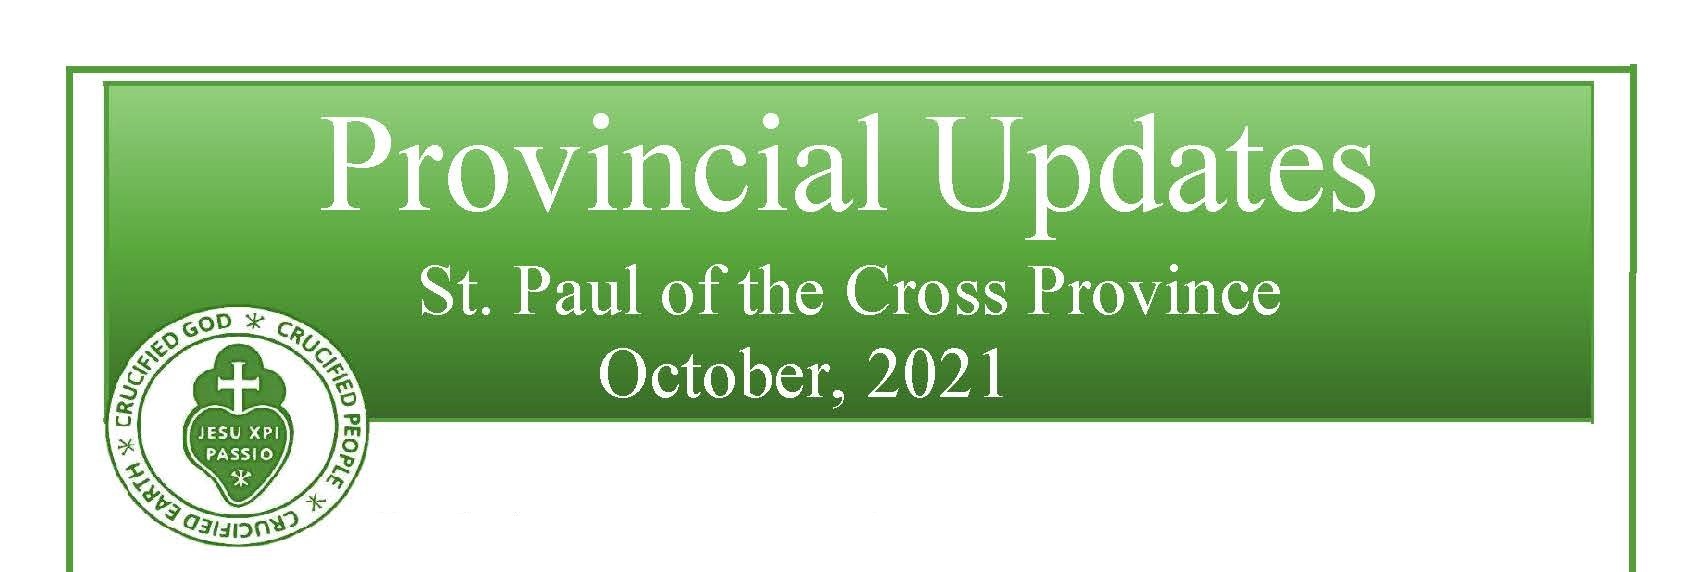 Provincial Update October 2021   